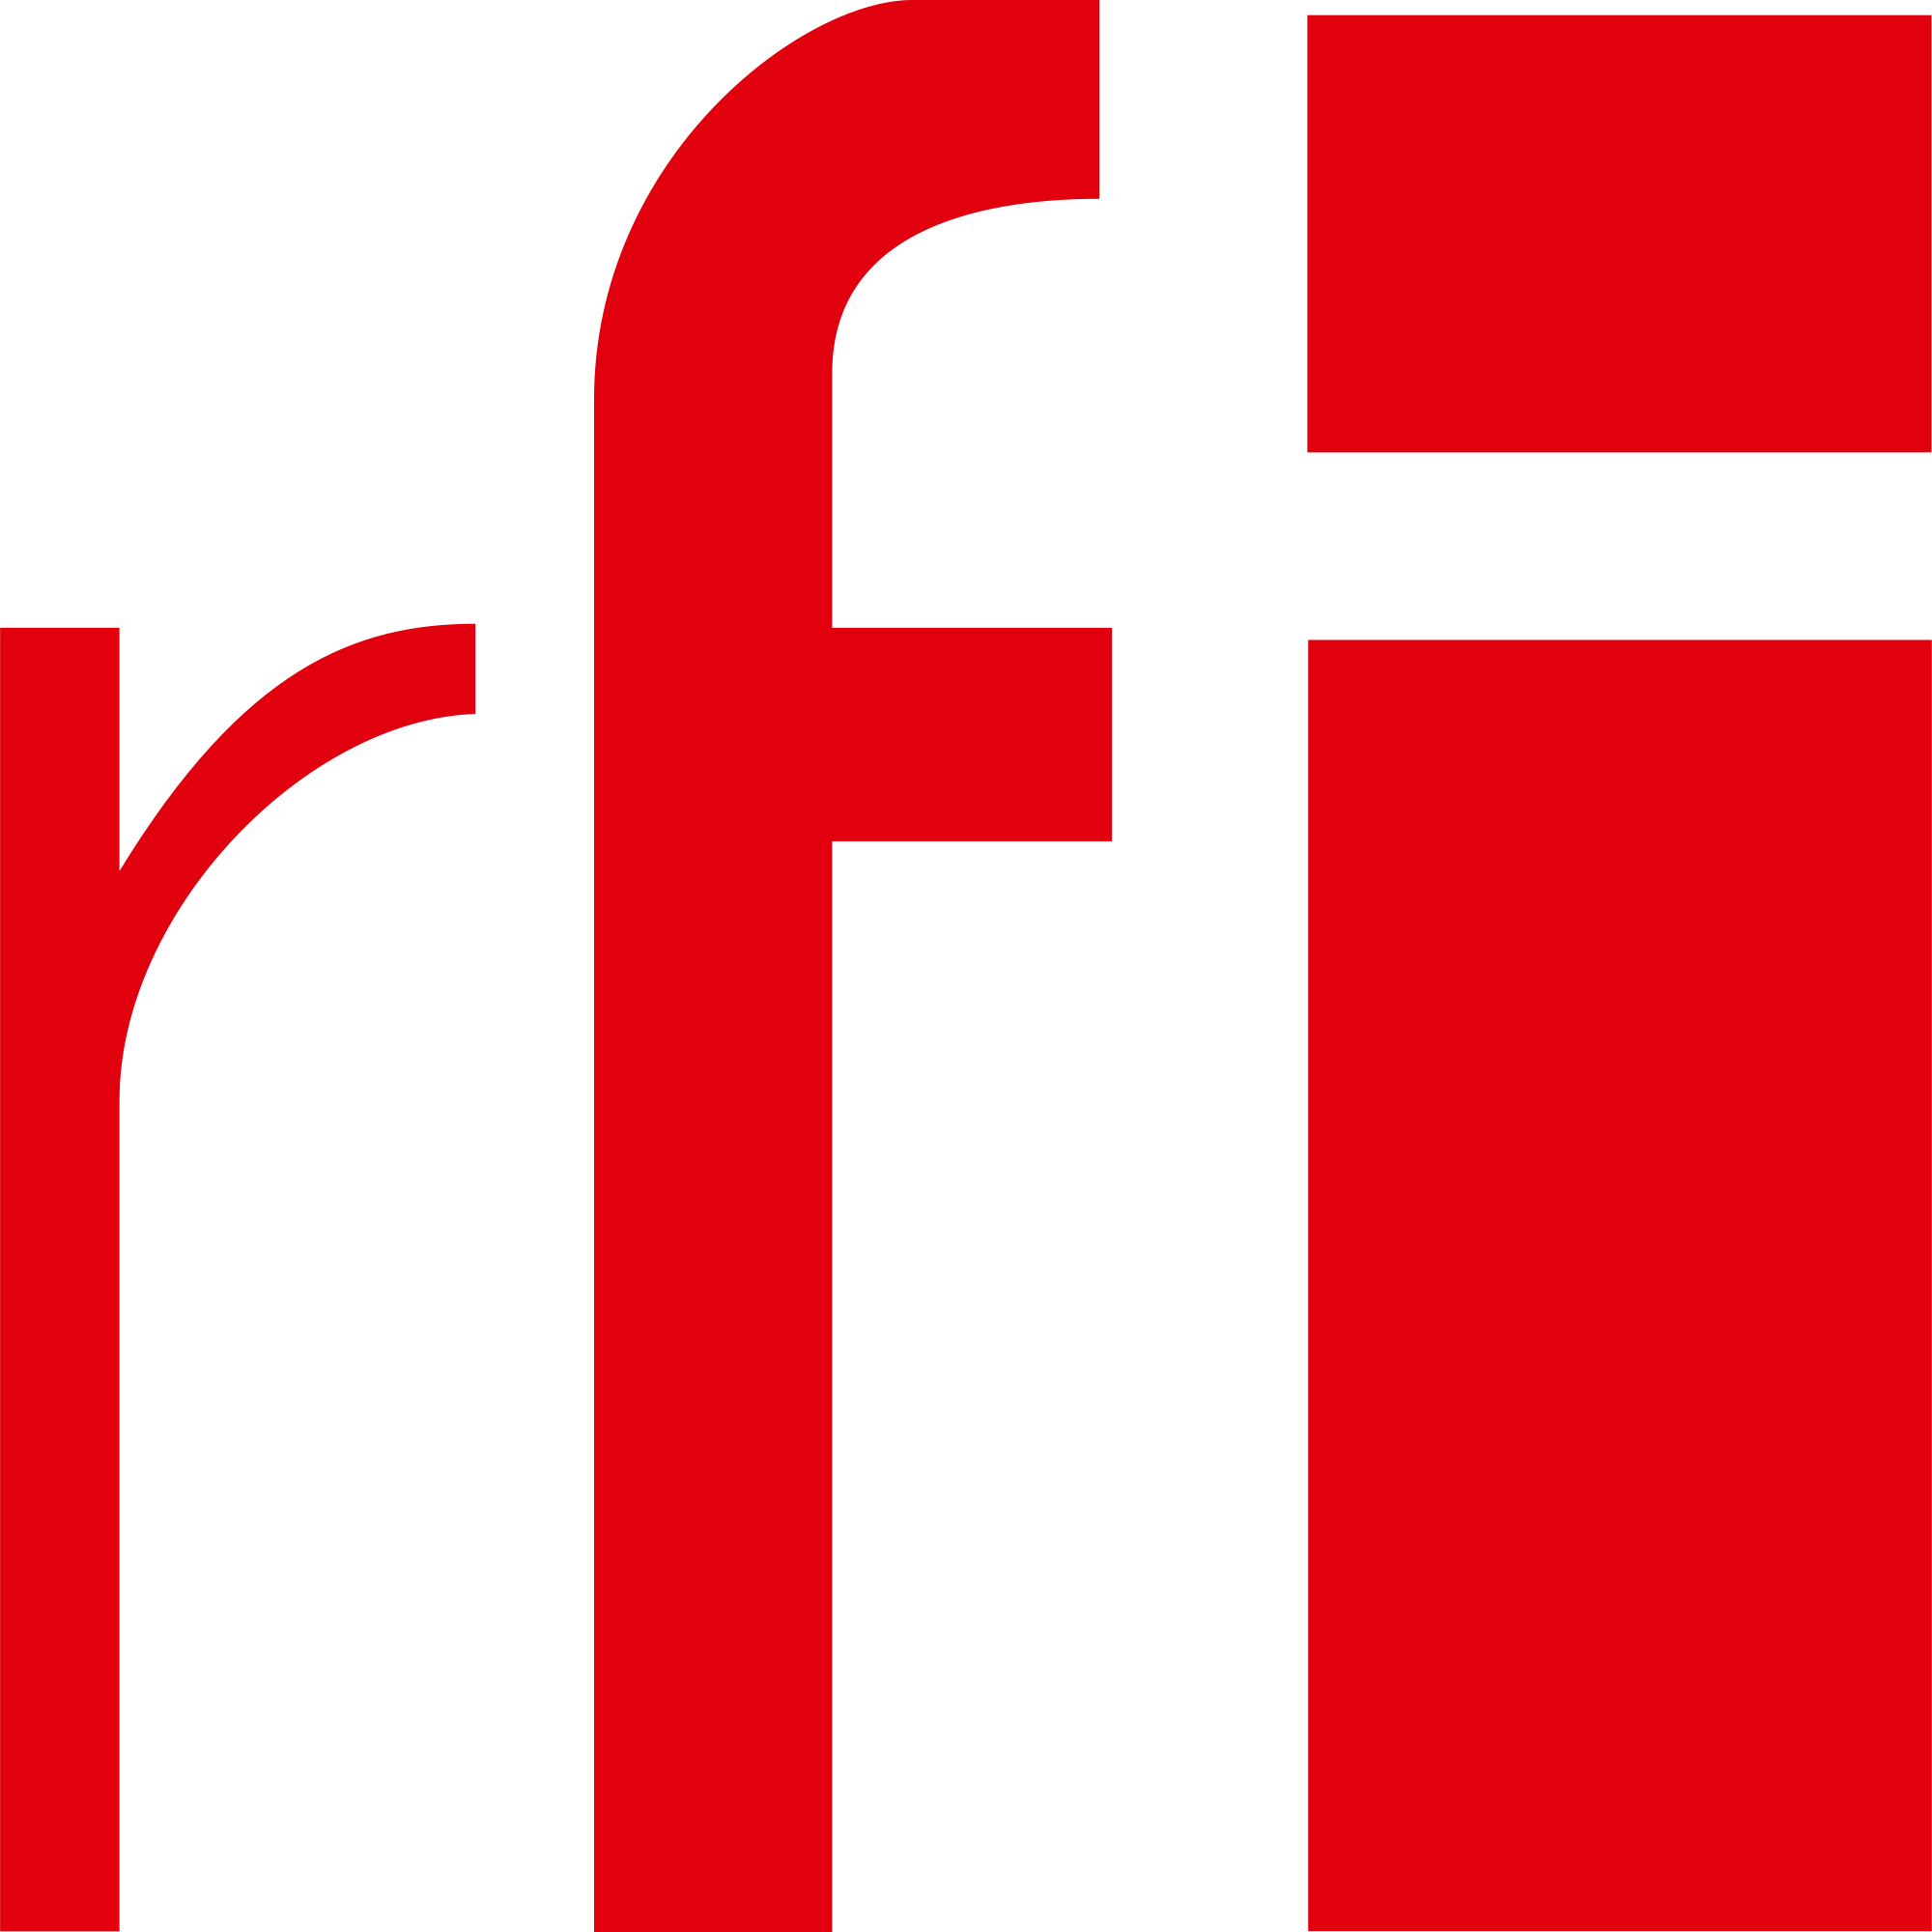 RFI Logo - File:Rfi logo.svg - Wikimedia Commons